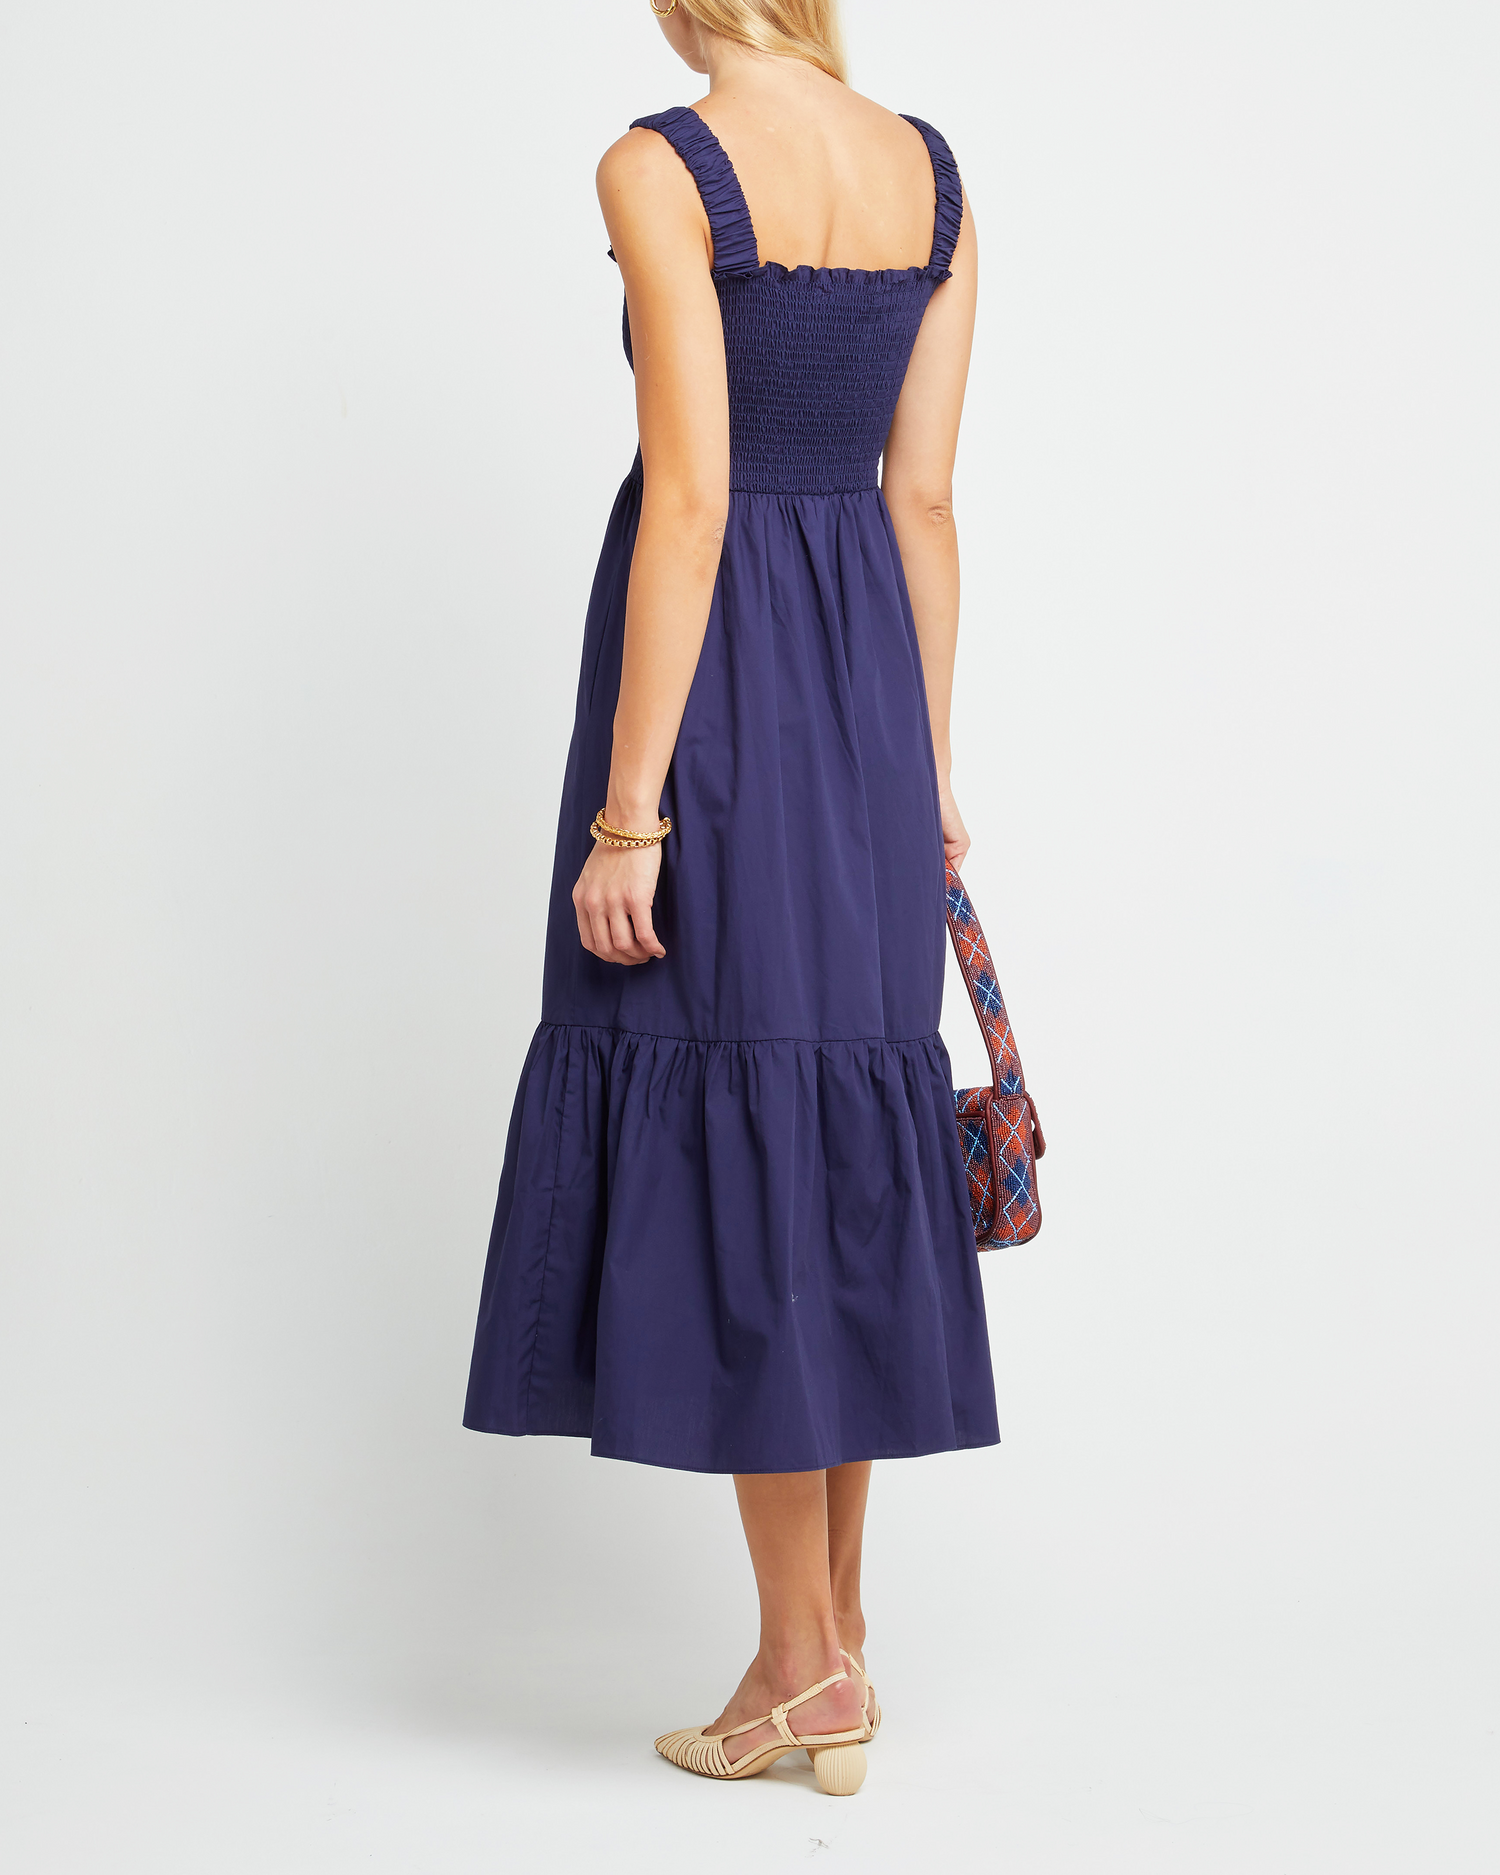 Fifth image of Cotton Isla Dress, a blue midi dress, smocked, square neckline, tiered skirt, tank